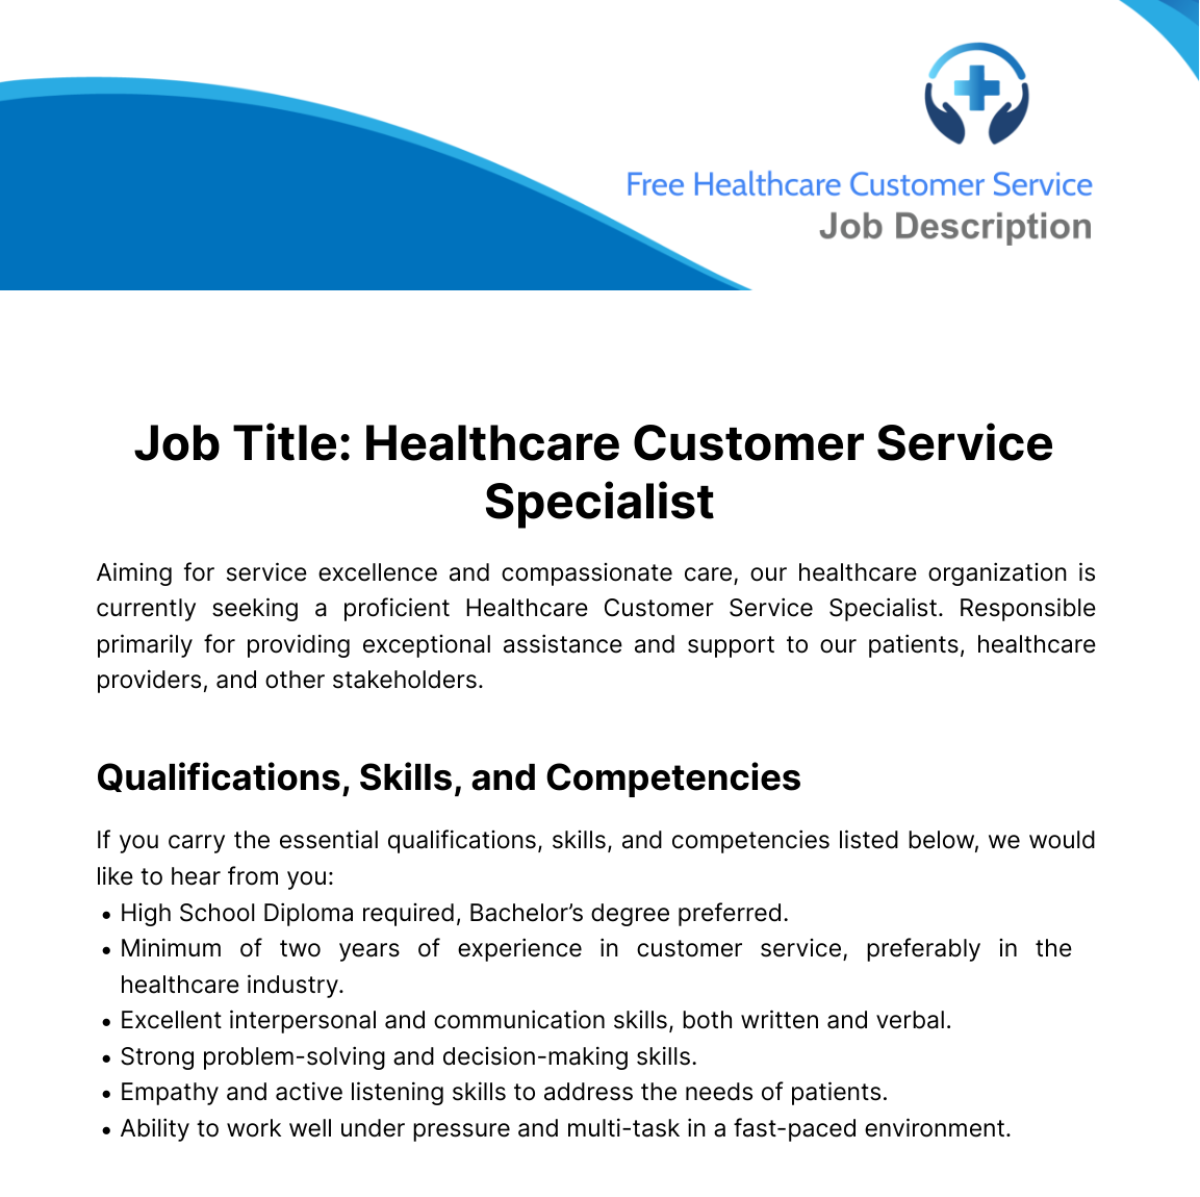 Free Healthcare Customer Service Job Description Template